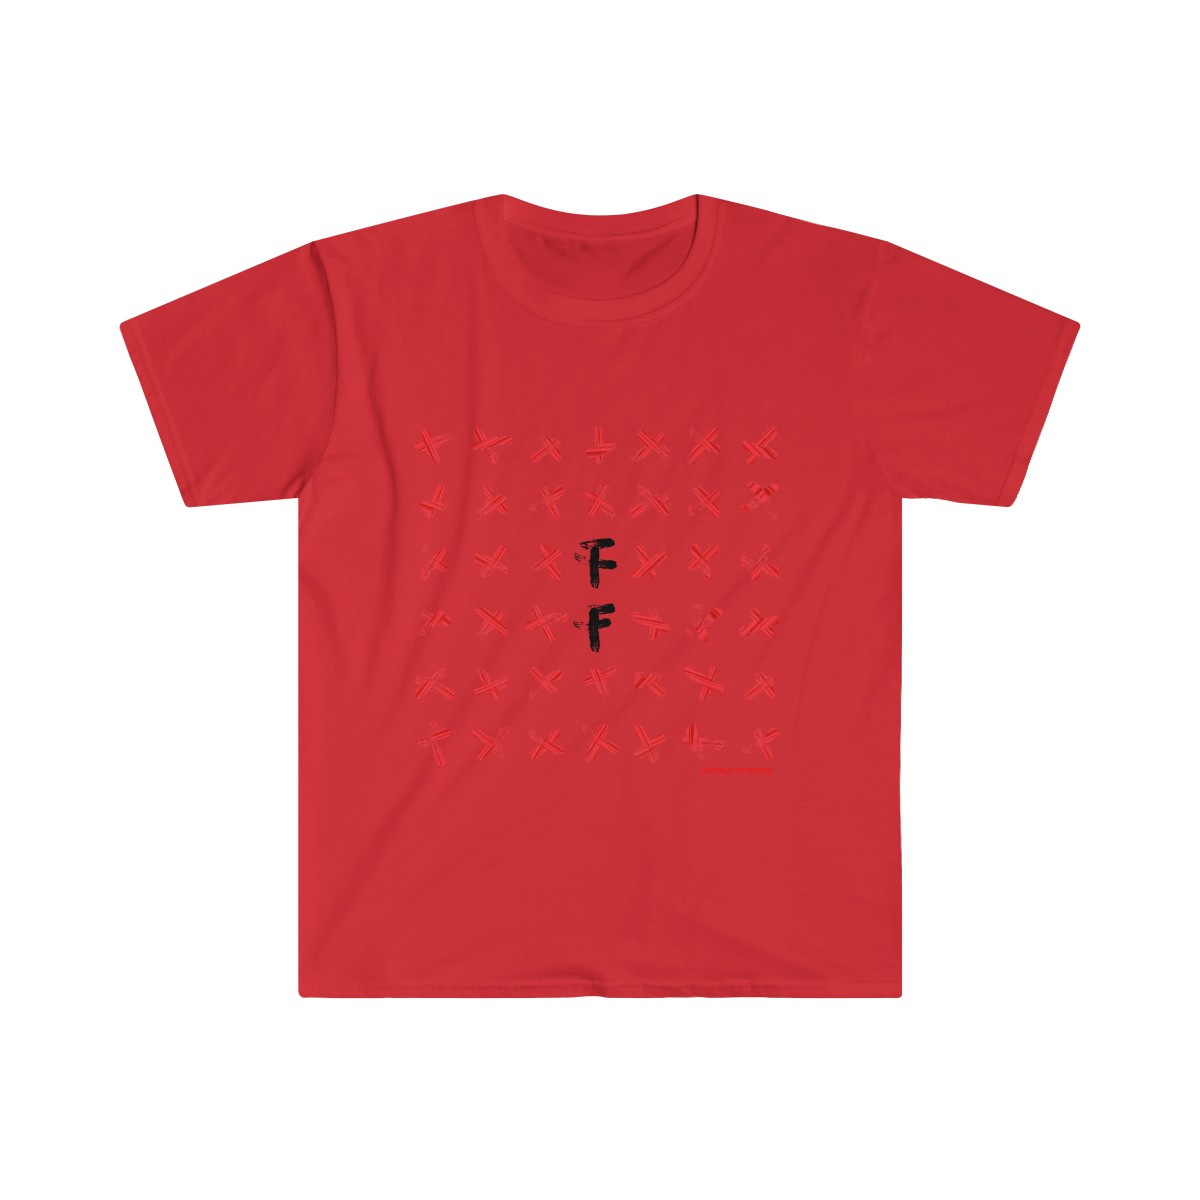 x-FF-x red T-shirt - Fistfy